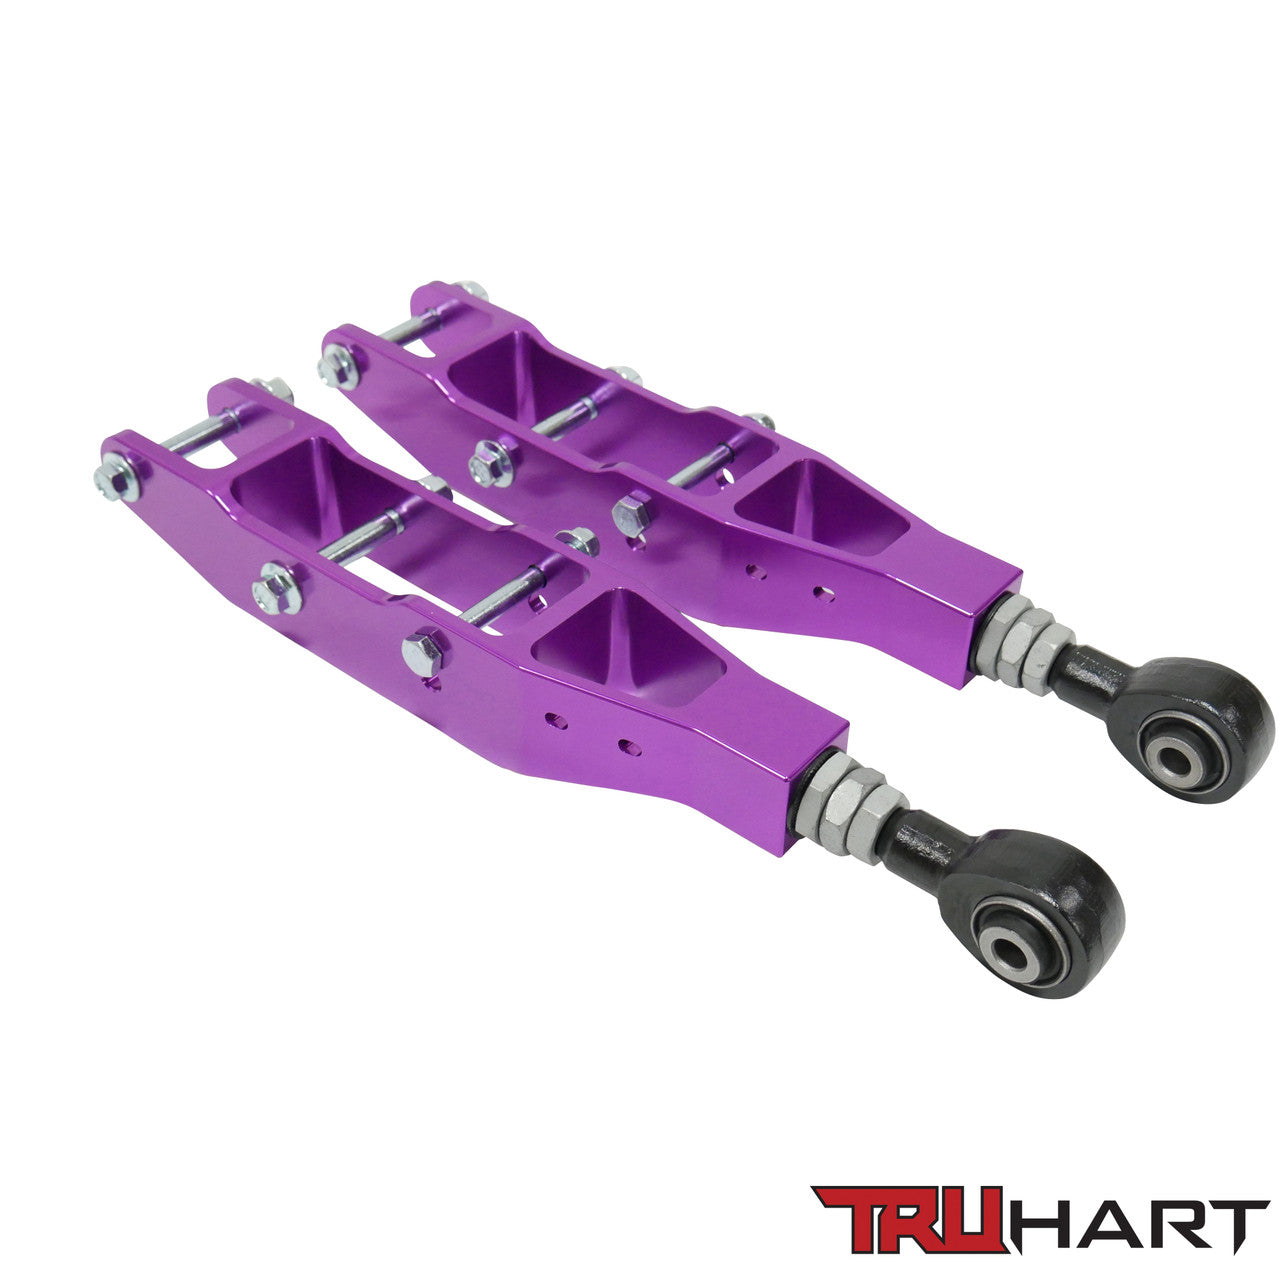 TruHart Adjustable Rear Lower Control Arms Kit For Subaru Impreza WRX STI 2008 - 2016 (Purple)